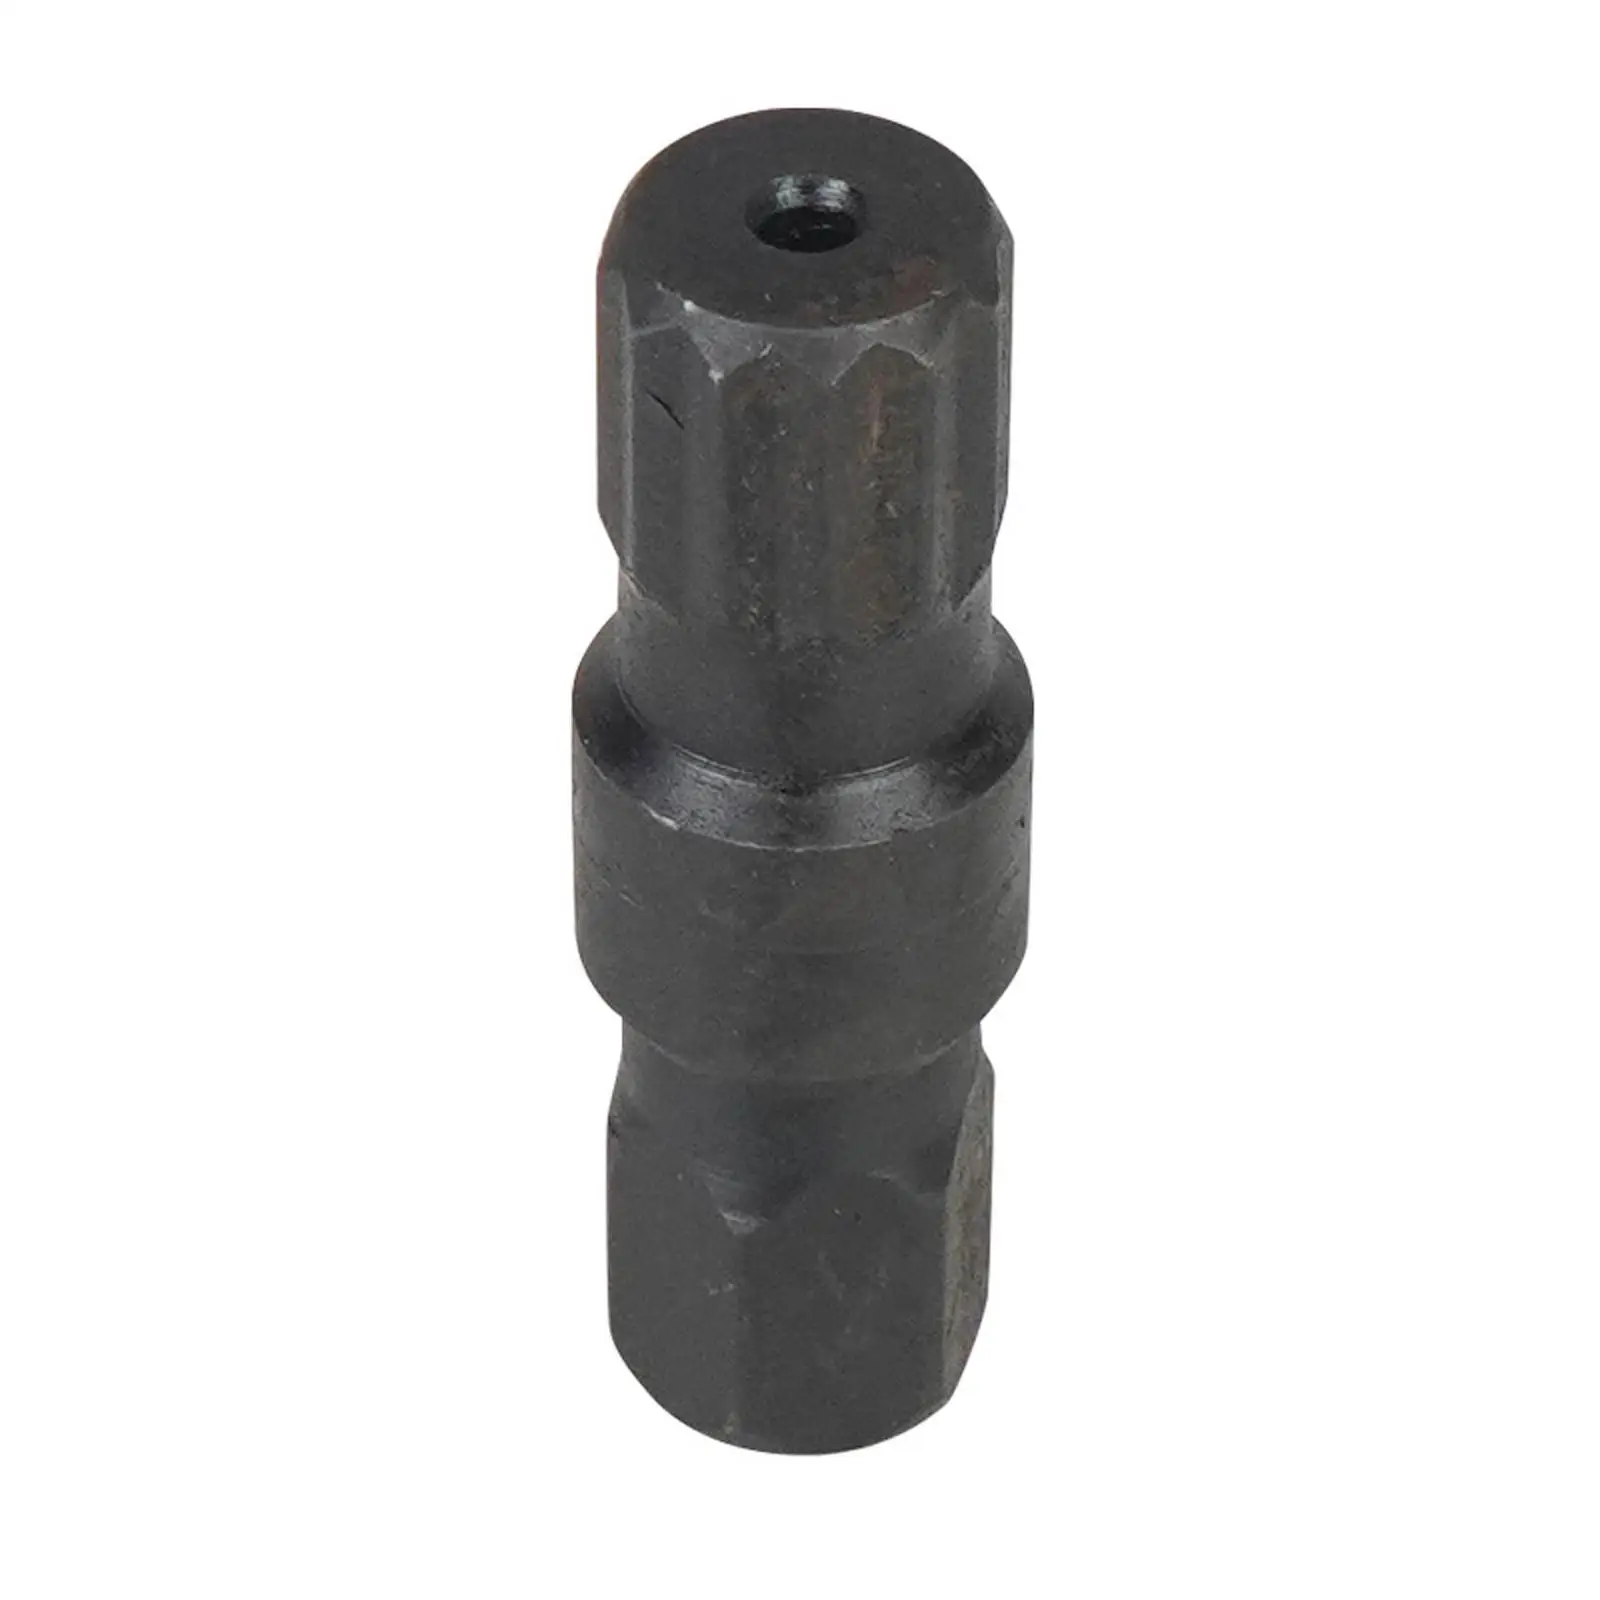 Hinge Pin Tool Spare Parts Durable 91-78310 for Mercury Mercruiser